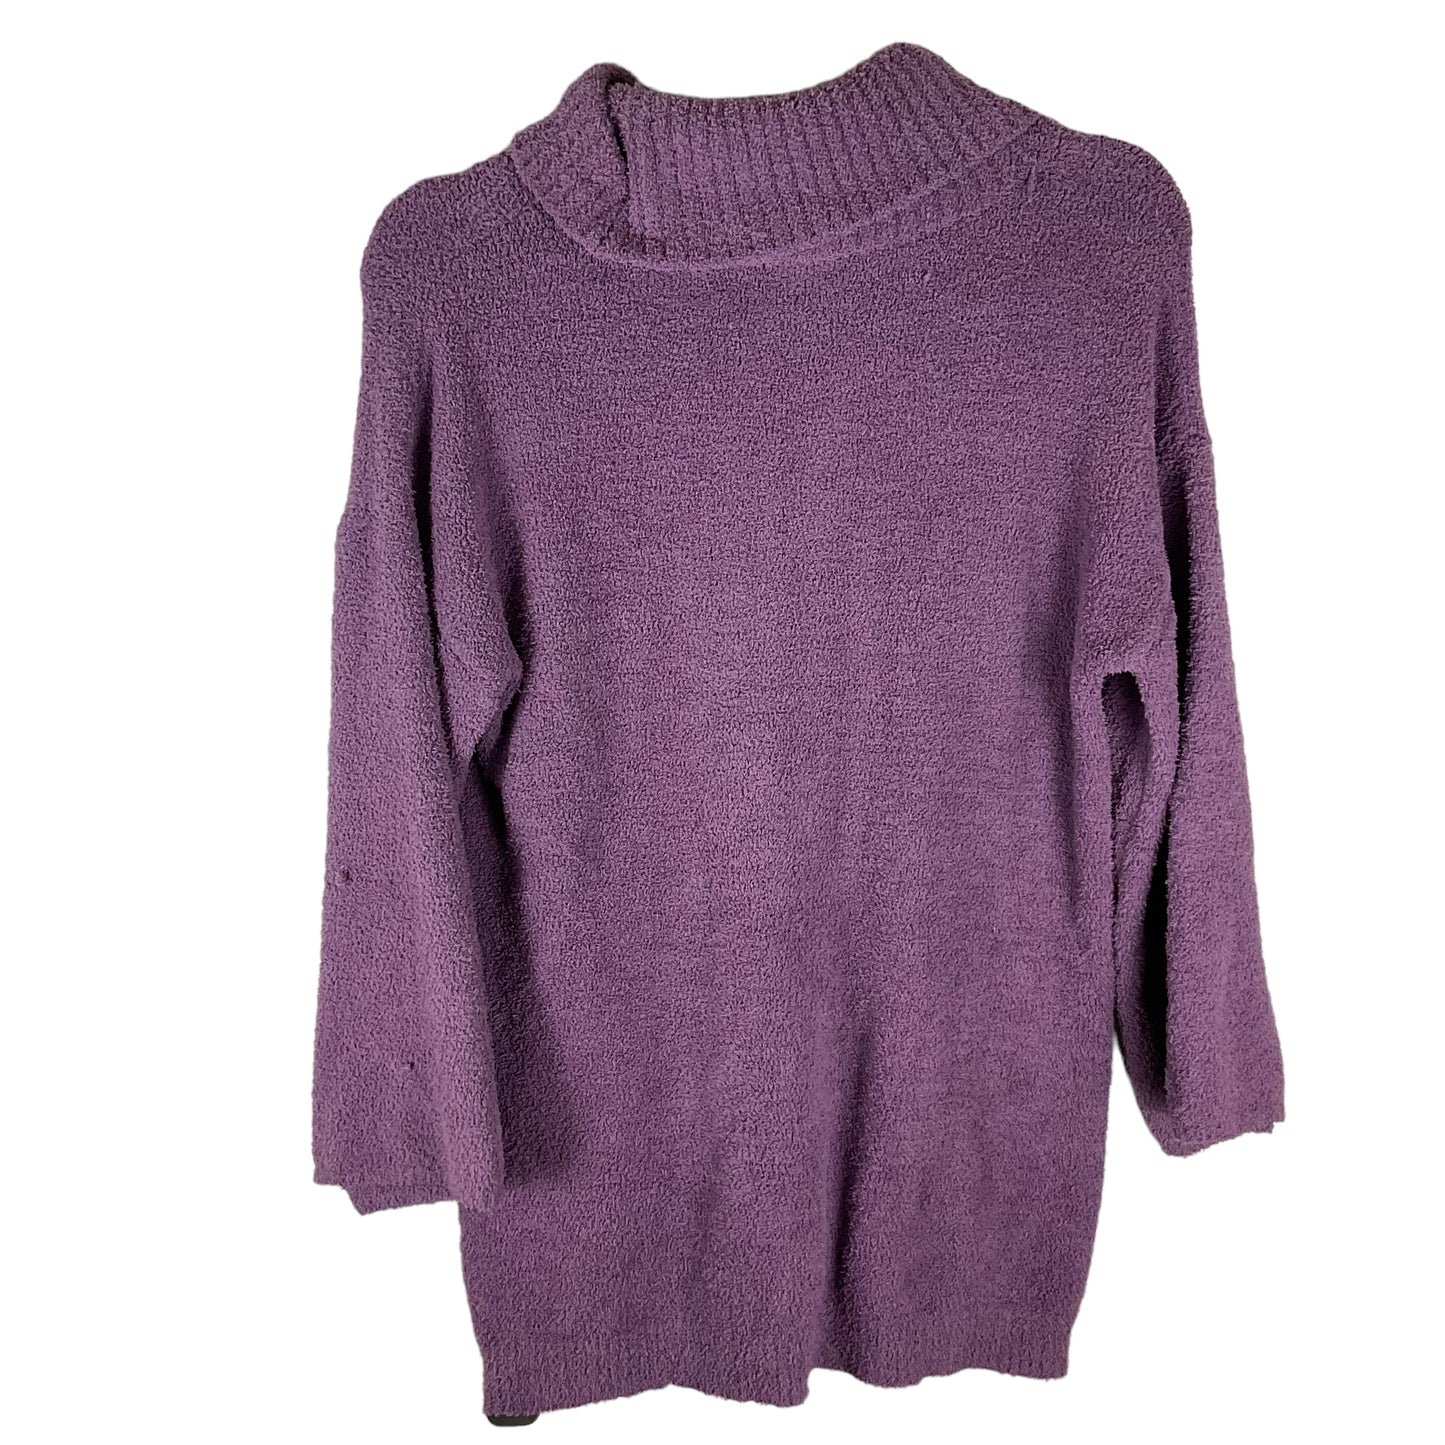 Sweater By Fashion Nova  Size: 1x